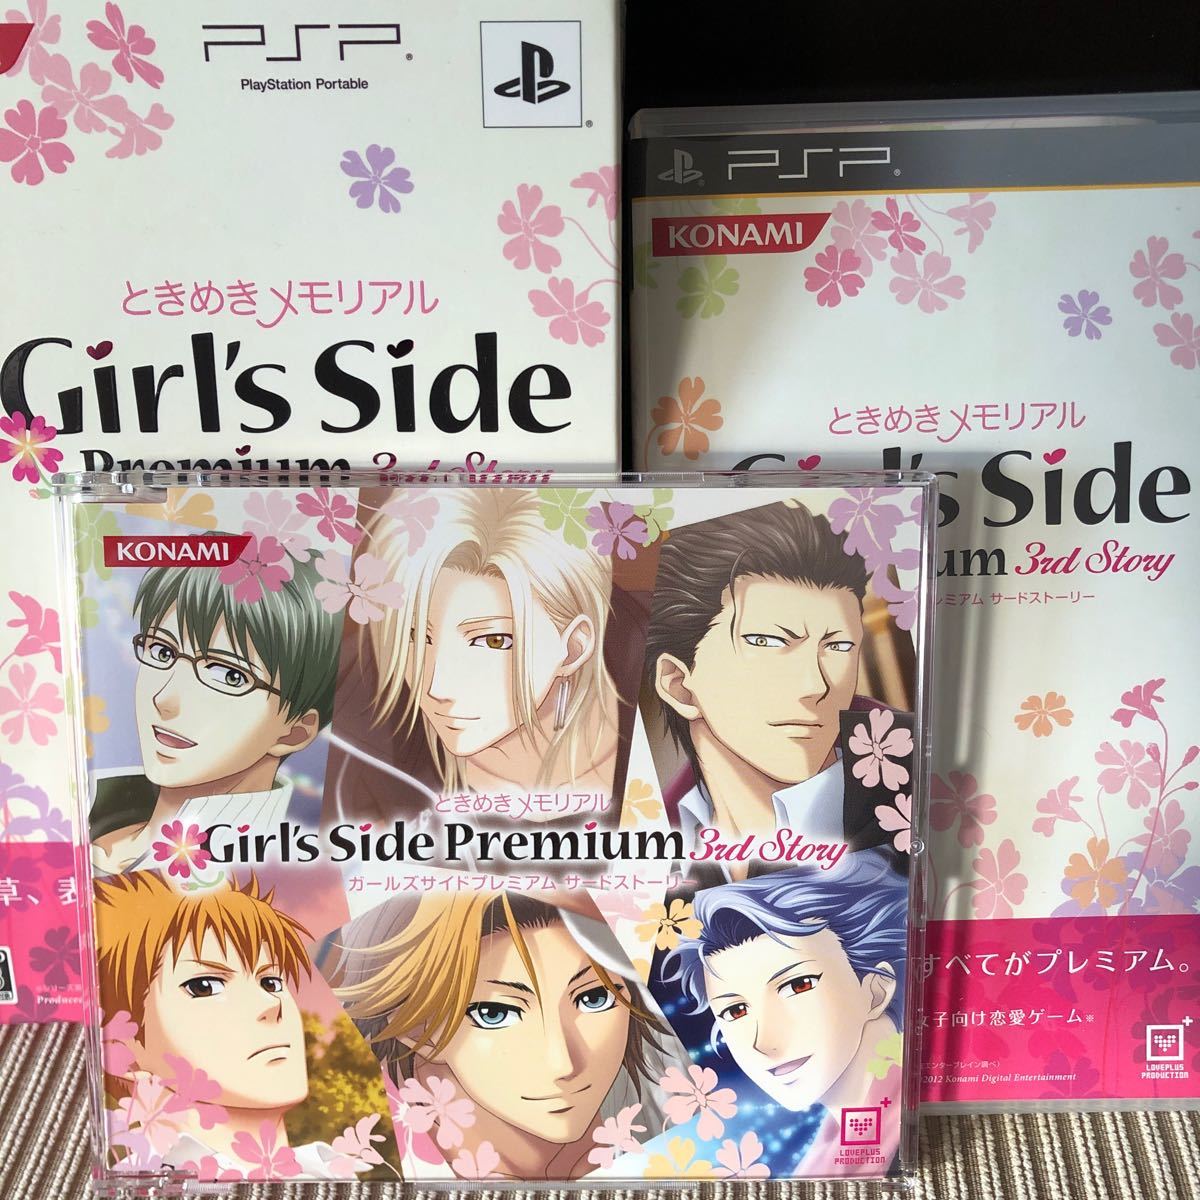 PSPときめきメモリアルGirl's Side Premium 3rd Story 初回生産版 lram